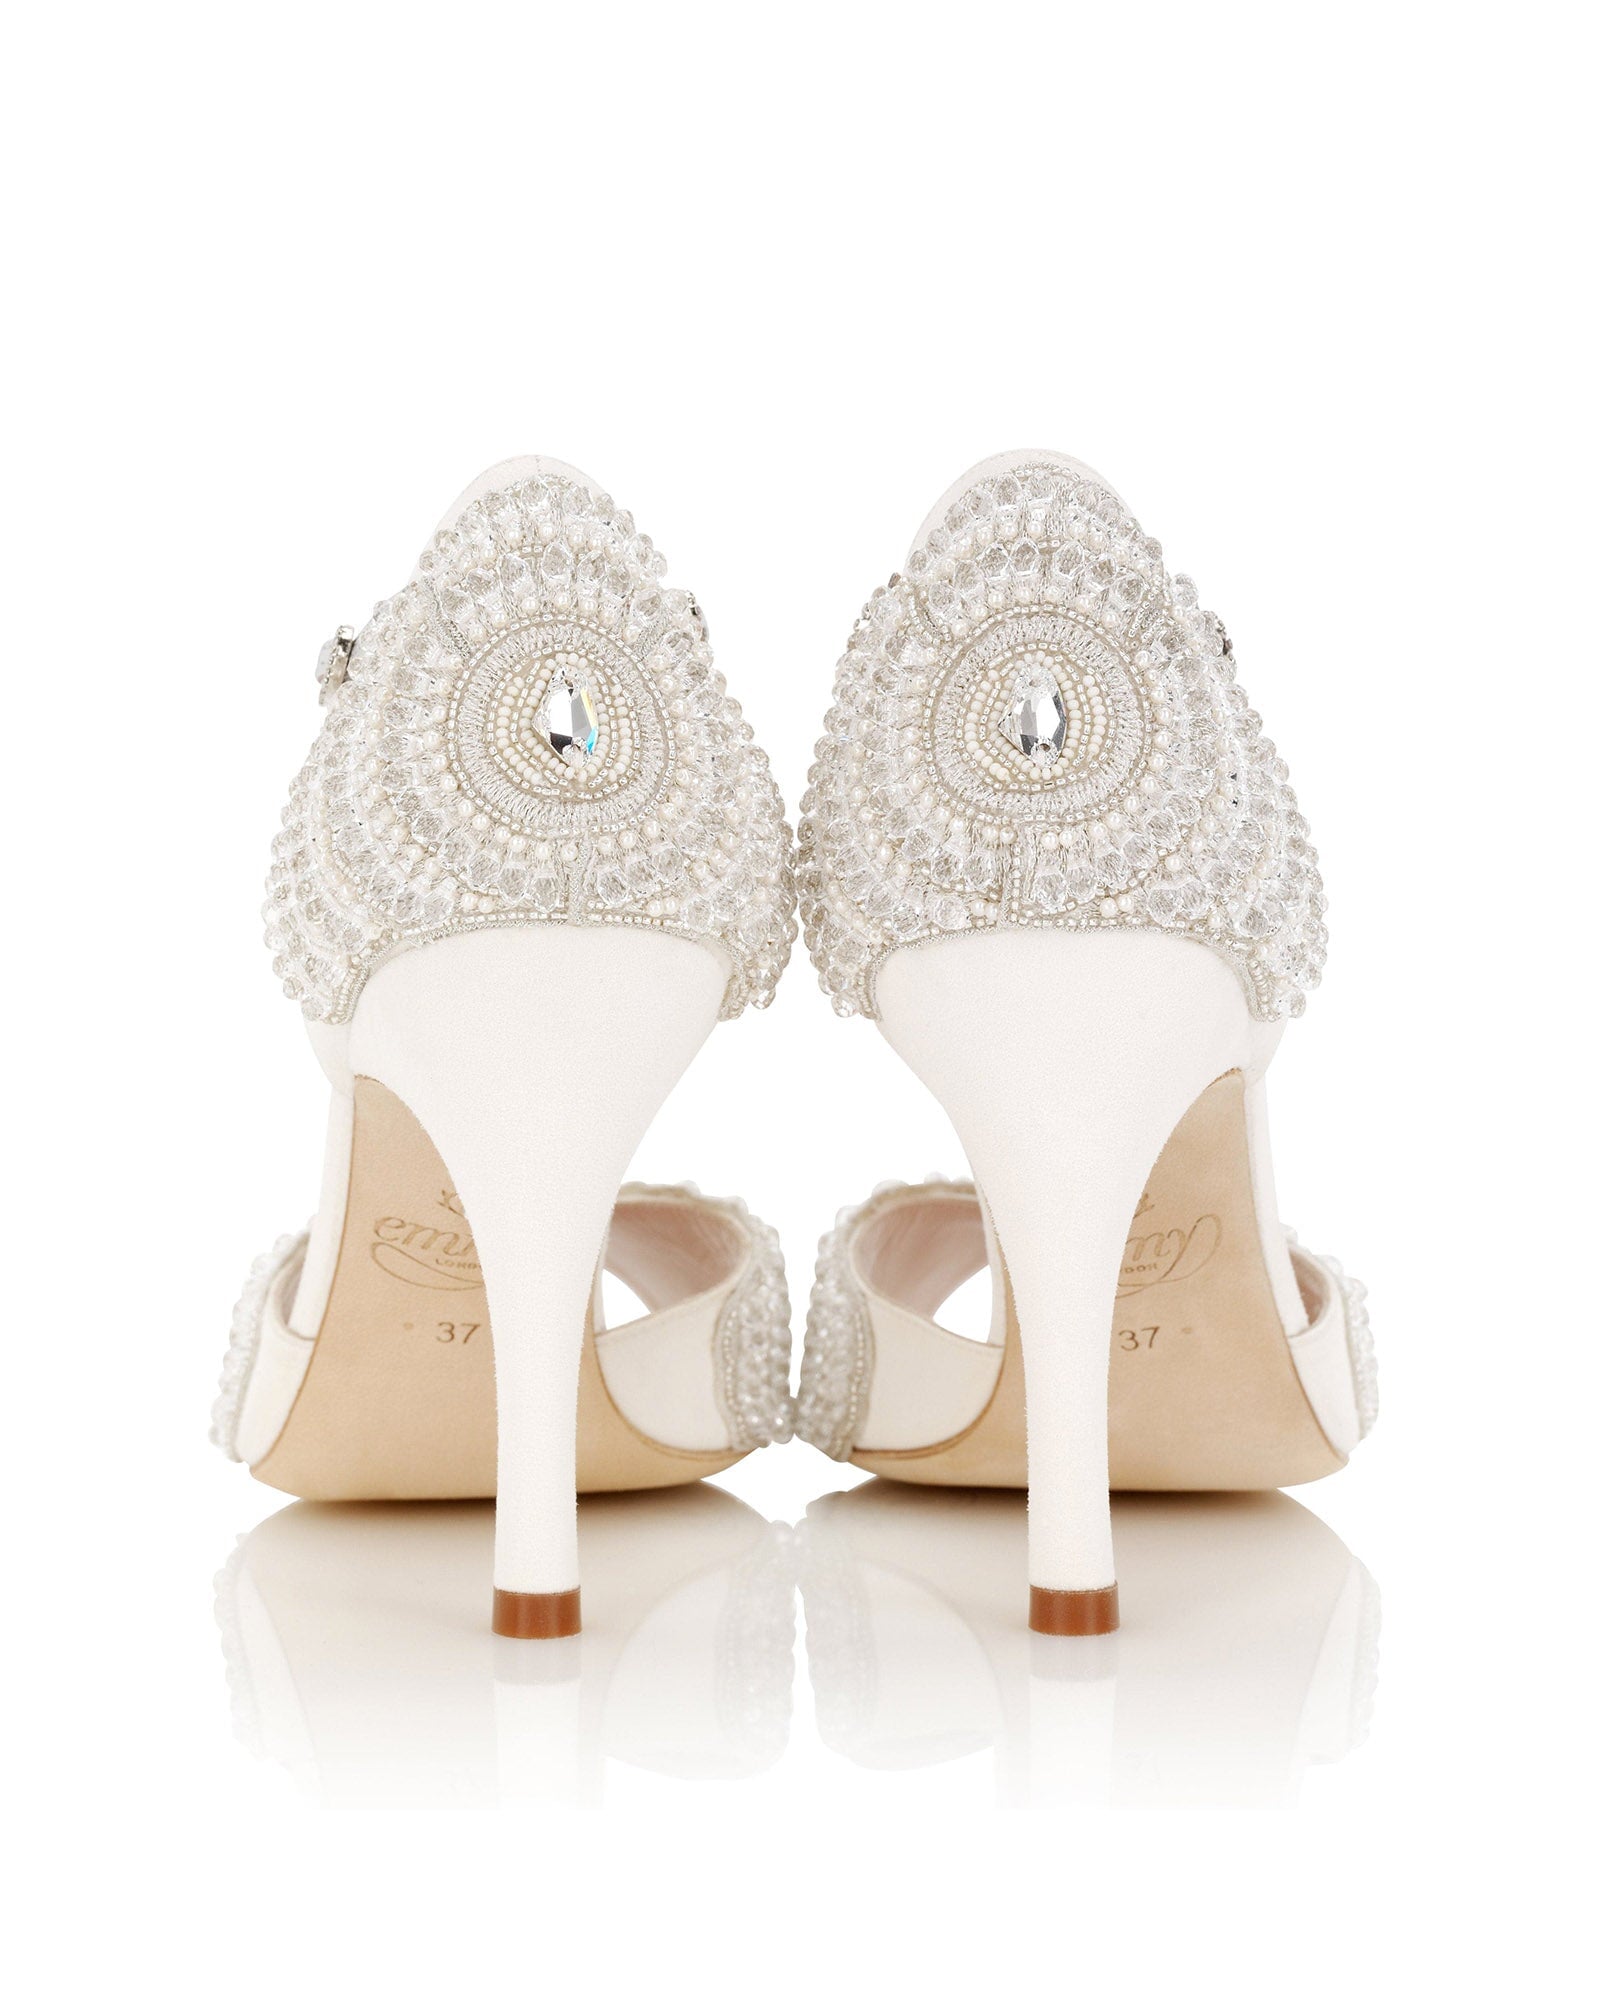 Gabriella Bridal Shoe Swarovski Embellished Bridal Shoes  image